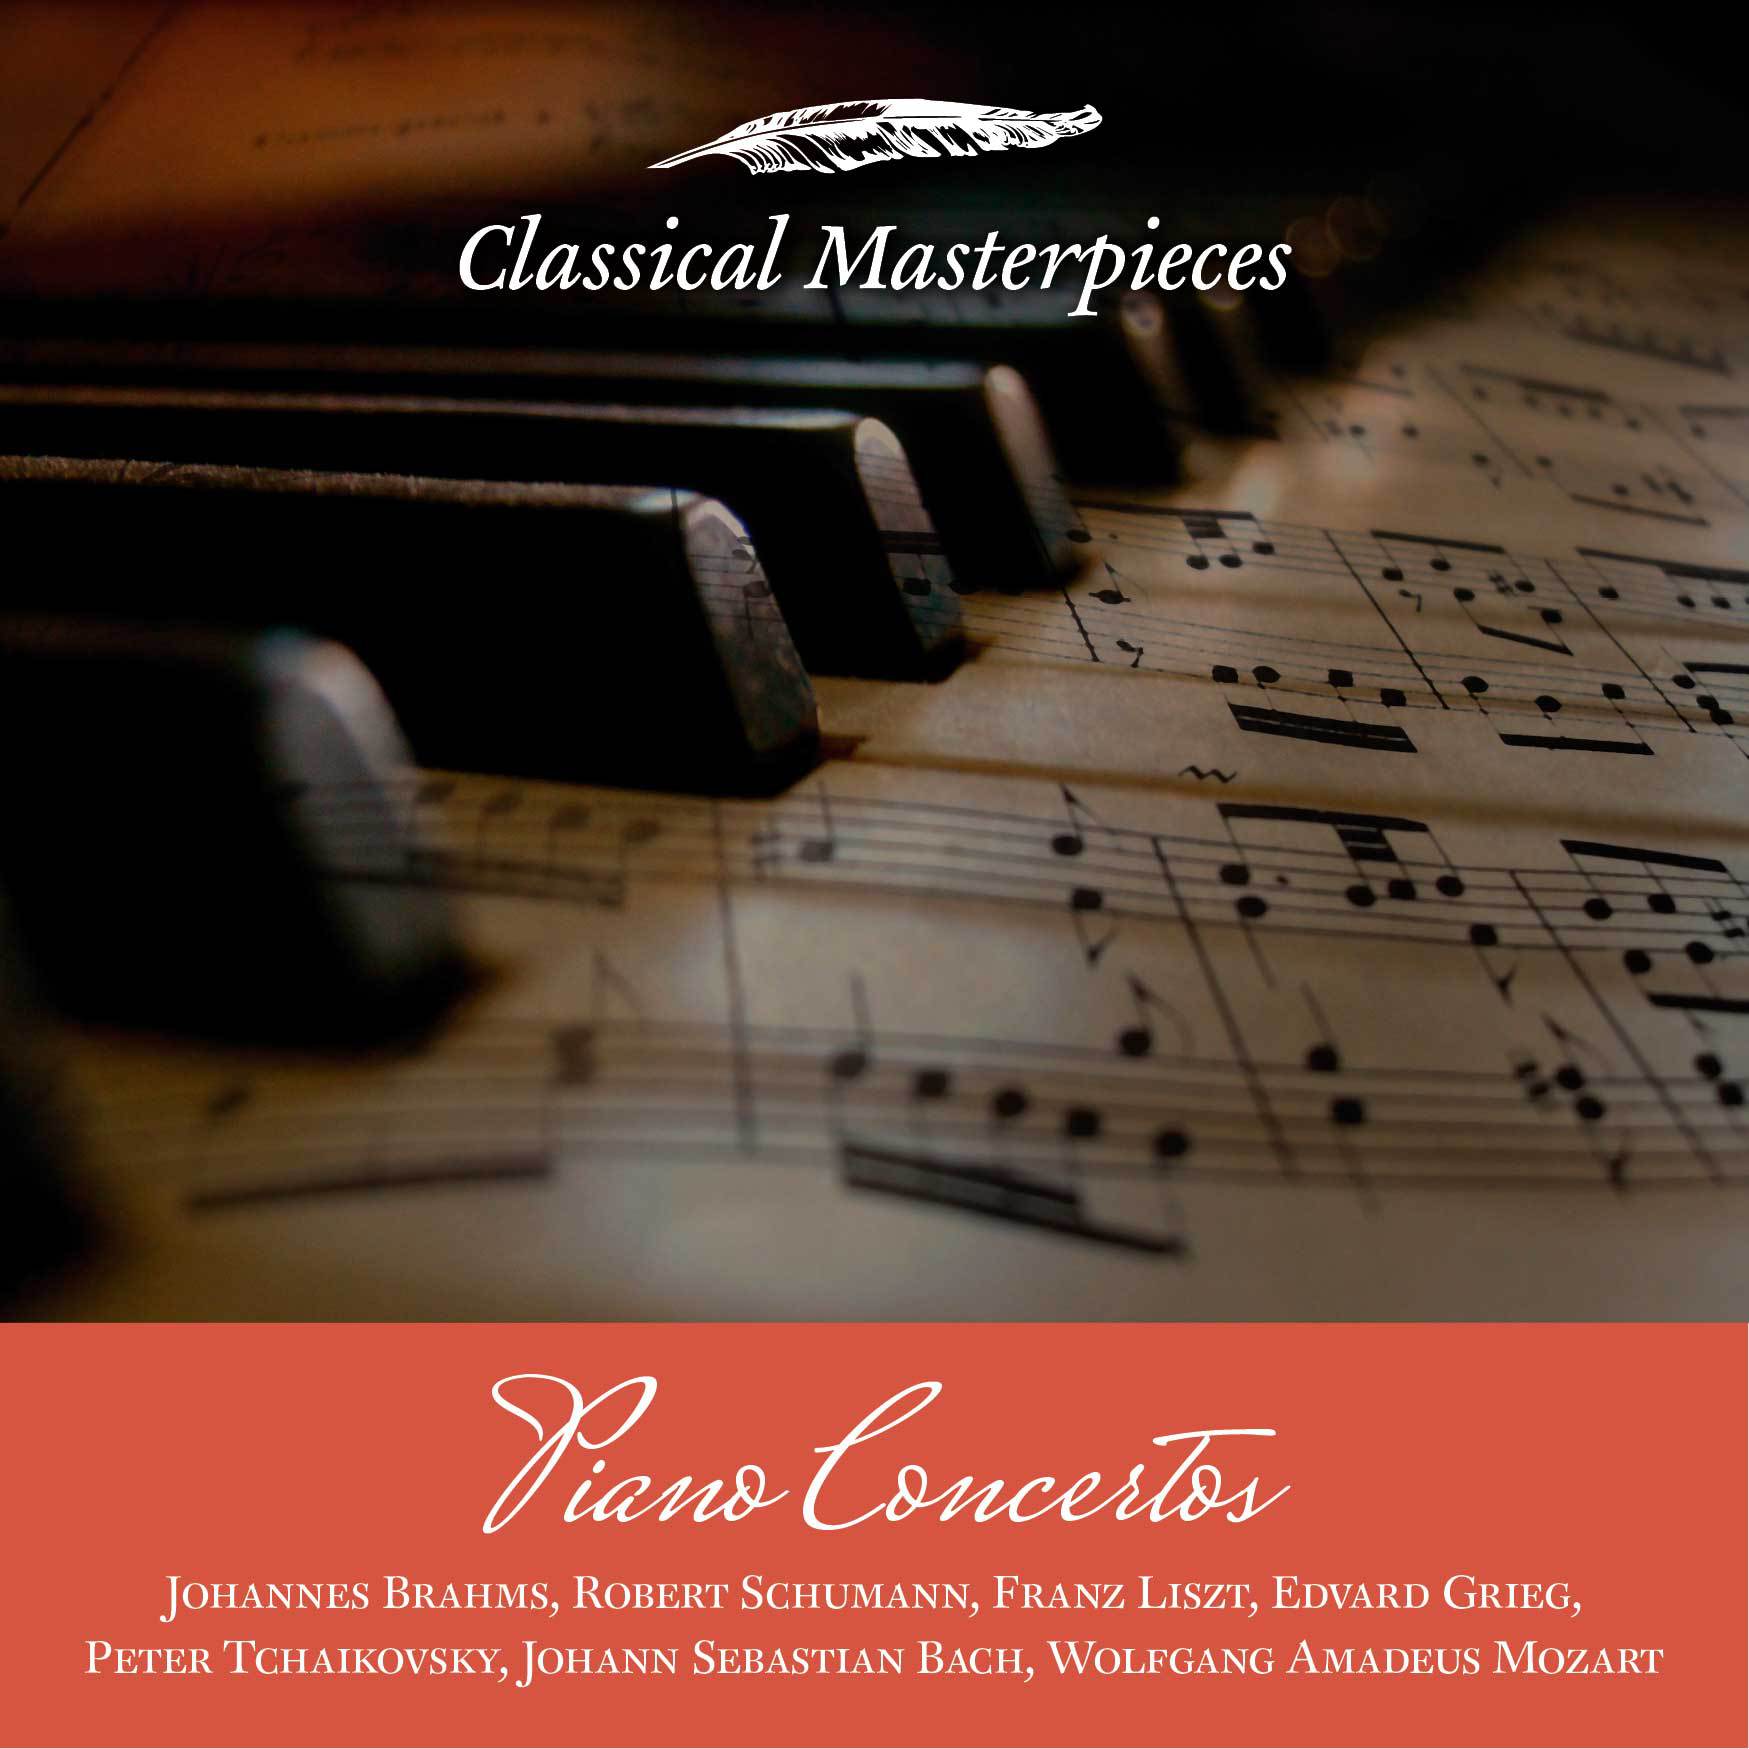 Piano Concertos: J.S. Bach, J. Brahms, F. Liszt (Classical Masterpieces)